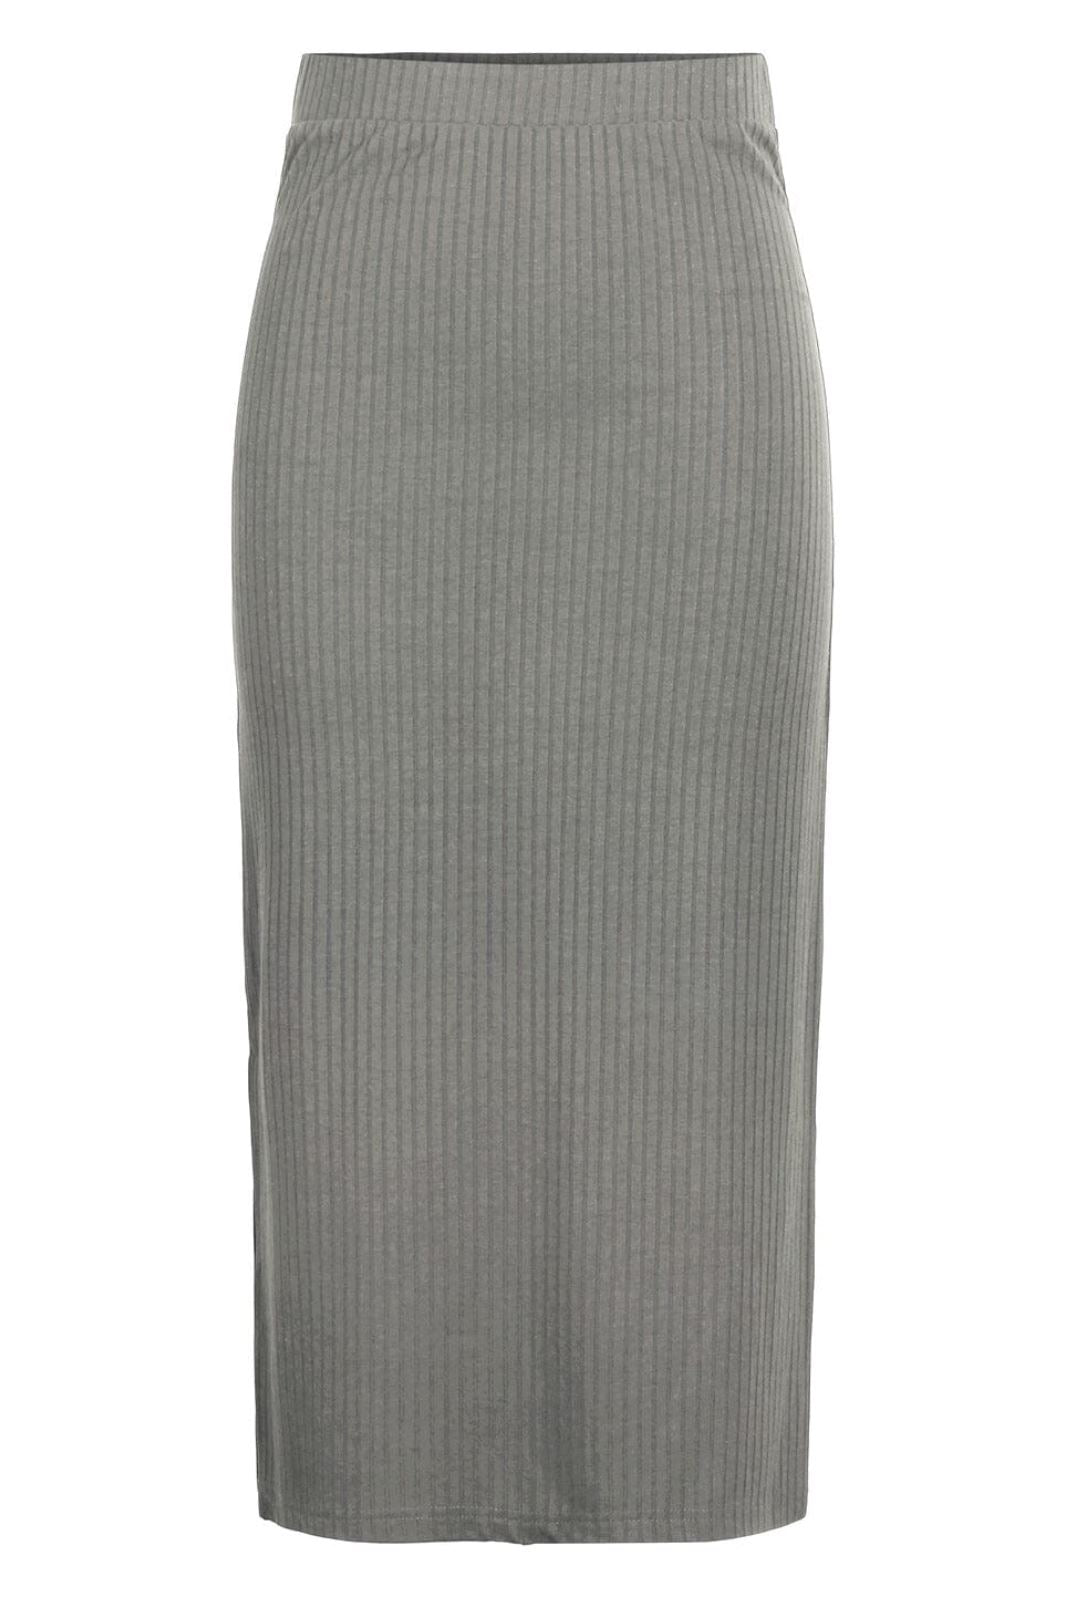 Pieces - Pckylie Midi Skirt - 3301046 Light Grey Melange Nederdele 